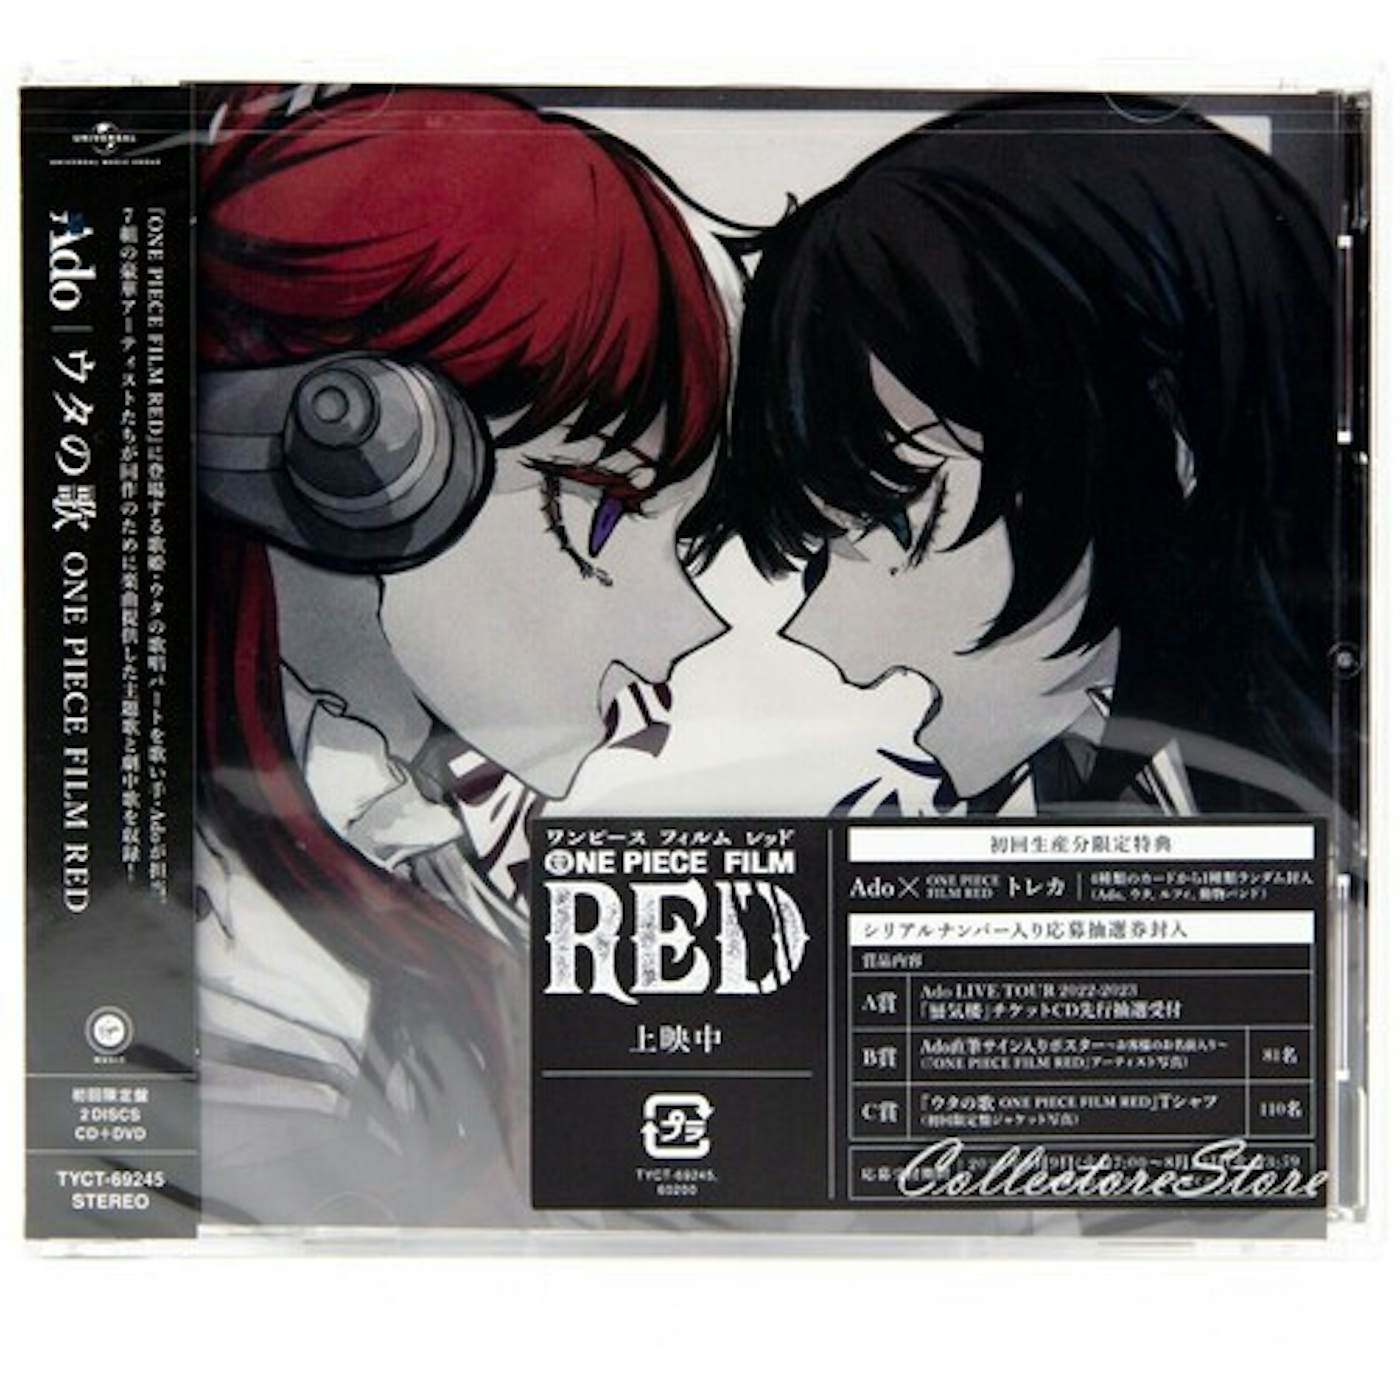 Ado Uta No Uta One Piece Film Red (Limited Edition/CD+DVD)